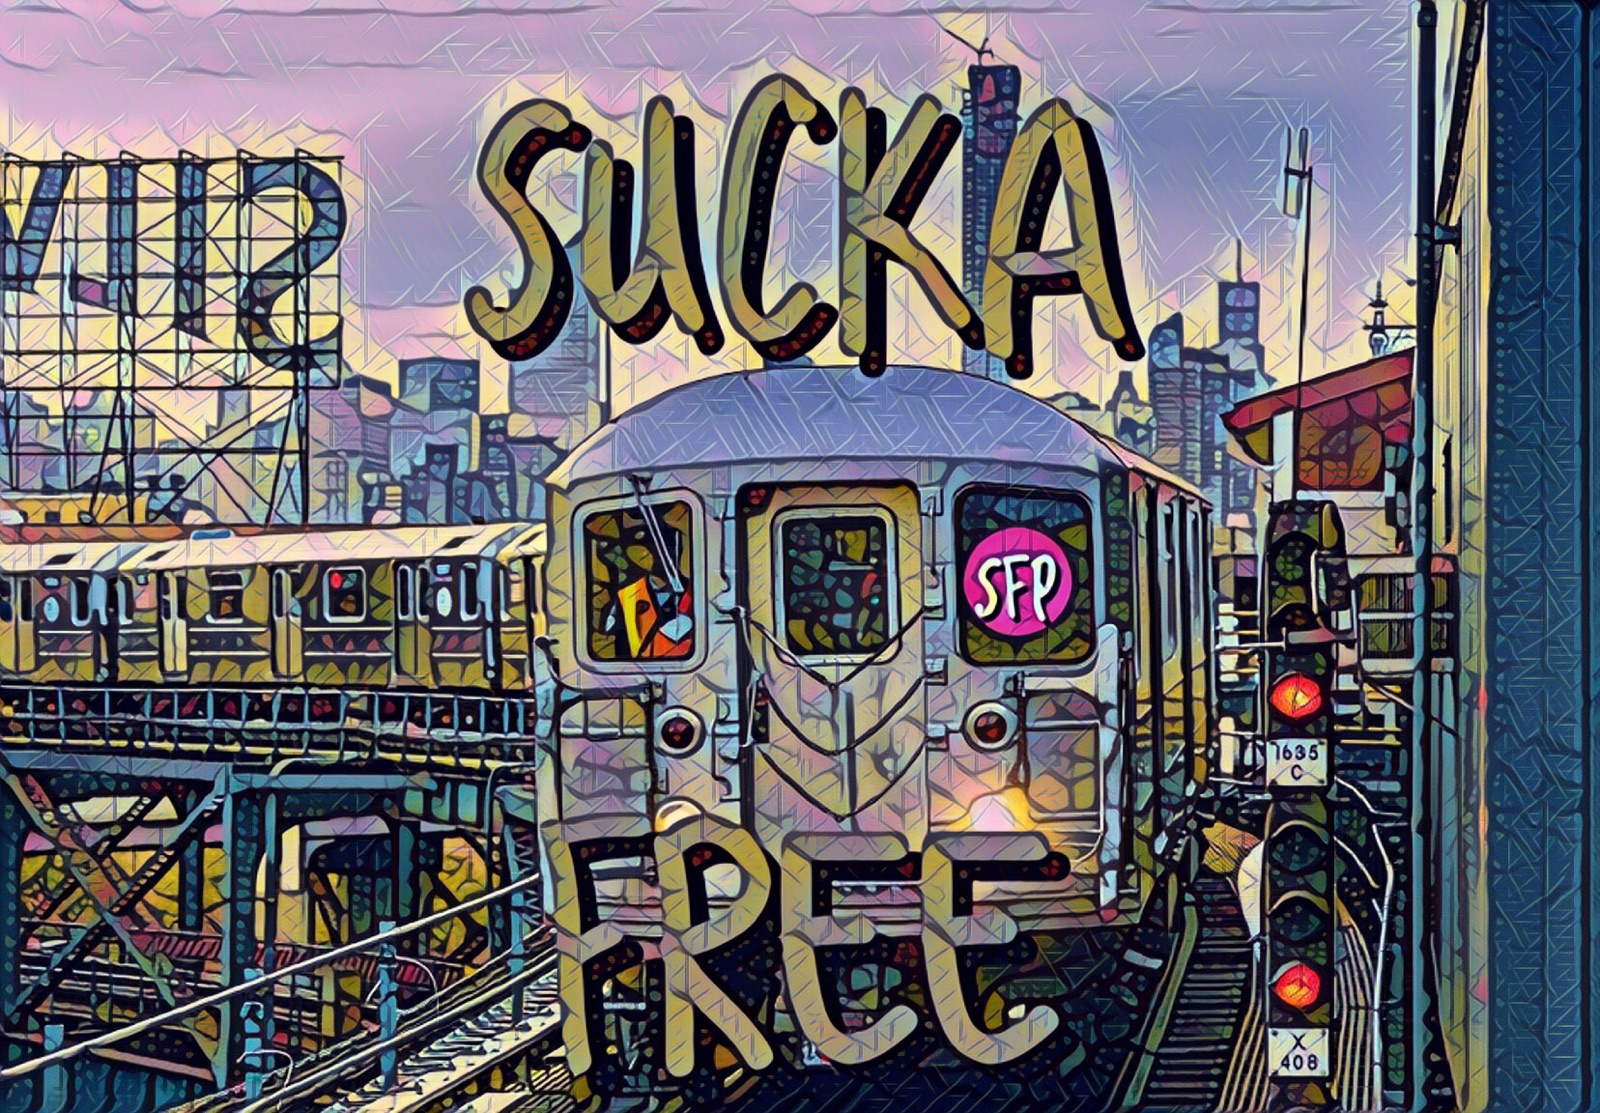 Stay Sucka Free